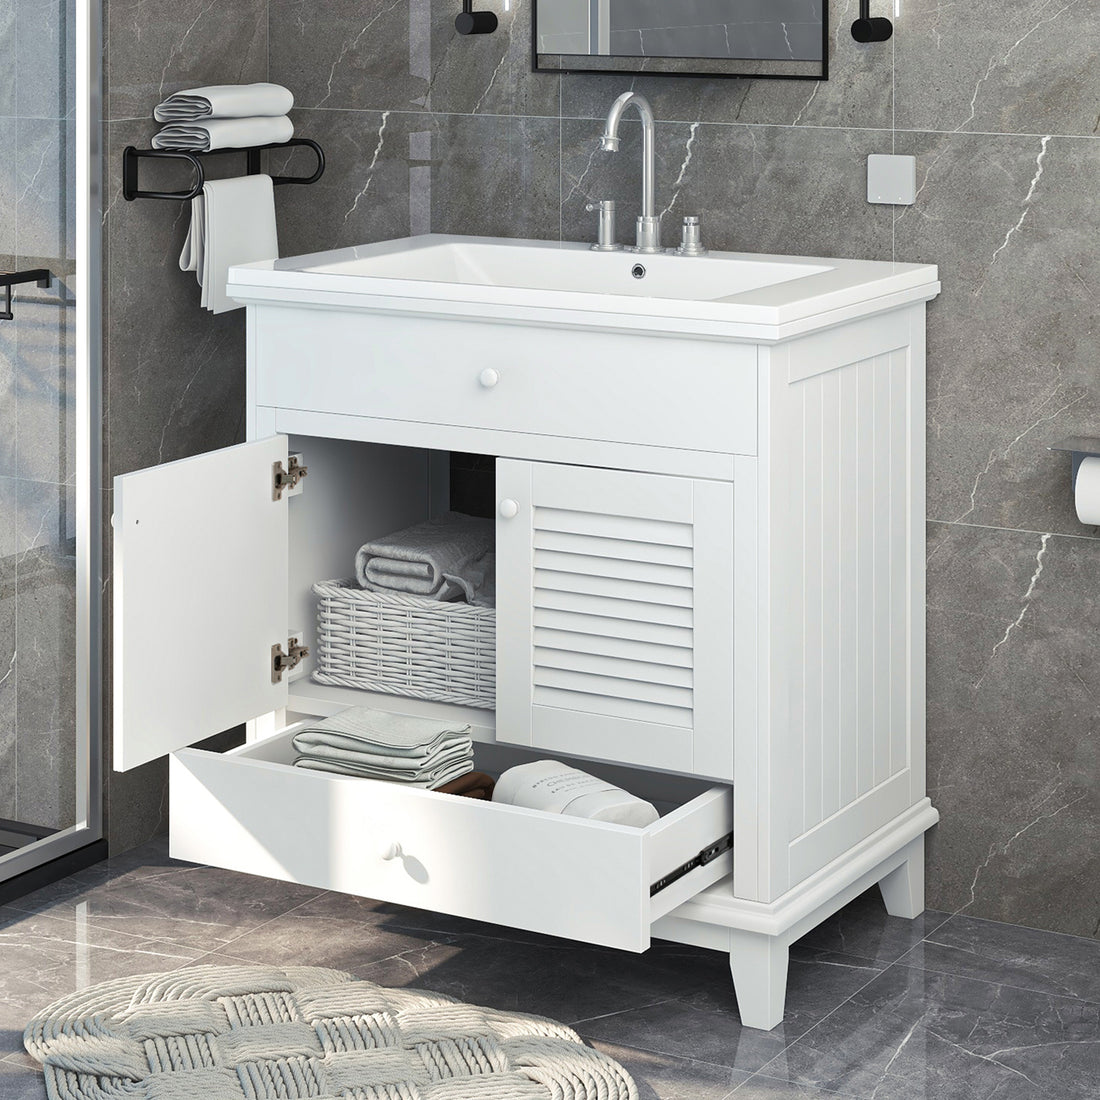 30" Bathroom Vanity Base without Sink, Bathroom white-solid wood